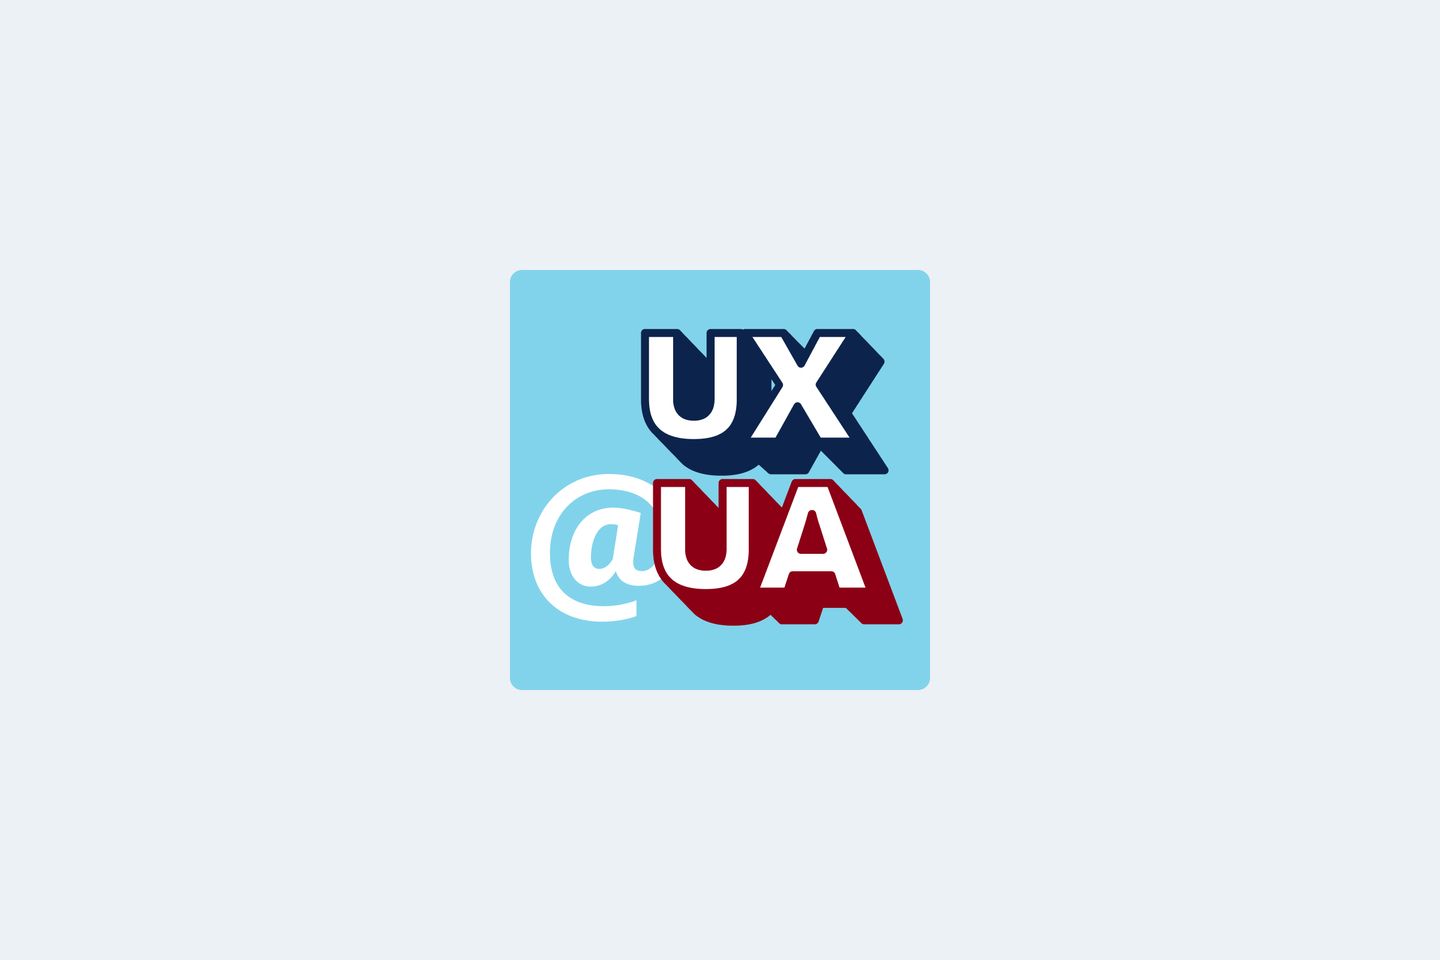 UX@UA square logo